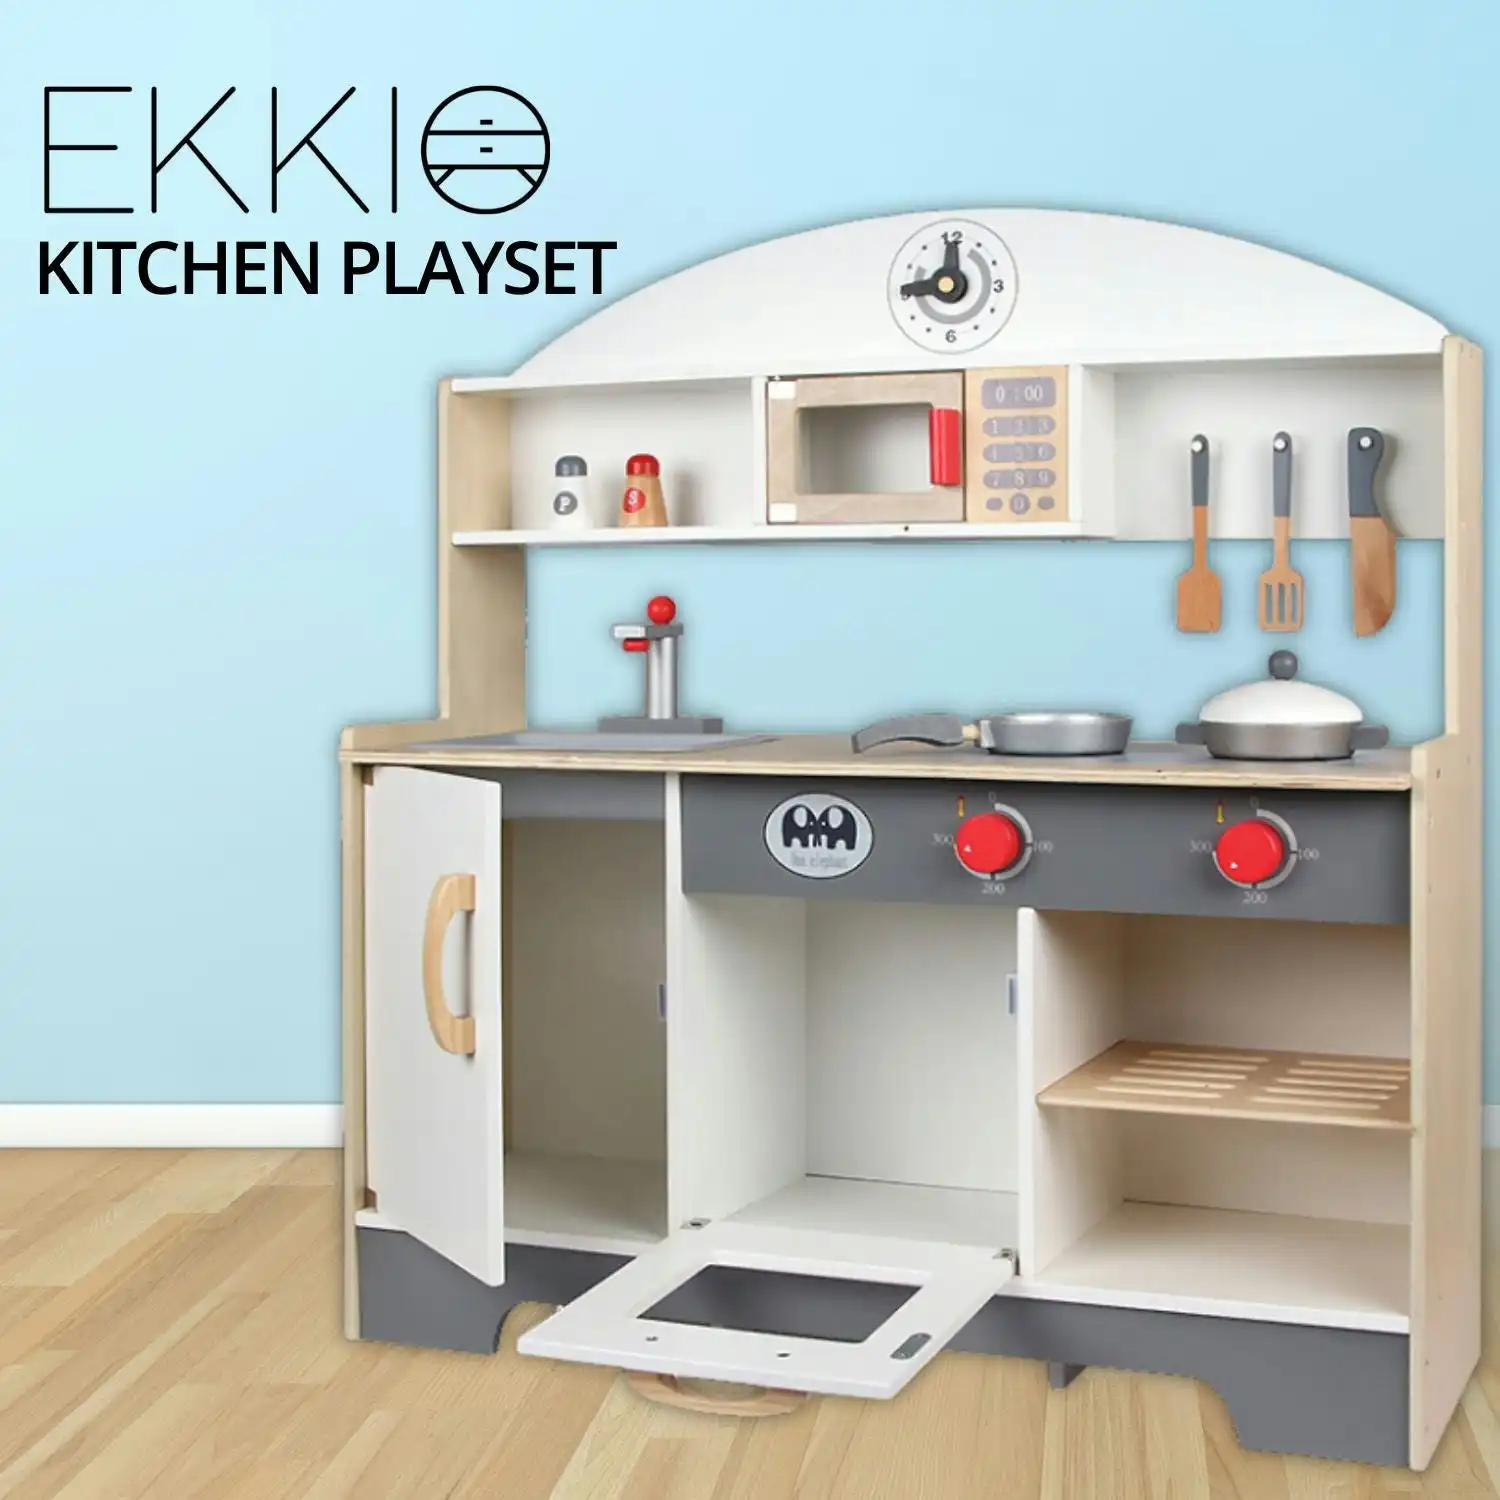 Ekkio Sturdy Construction  Environmentally Friendly Material Wooden Kitchen Playset For Kids (Minimalist)